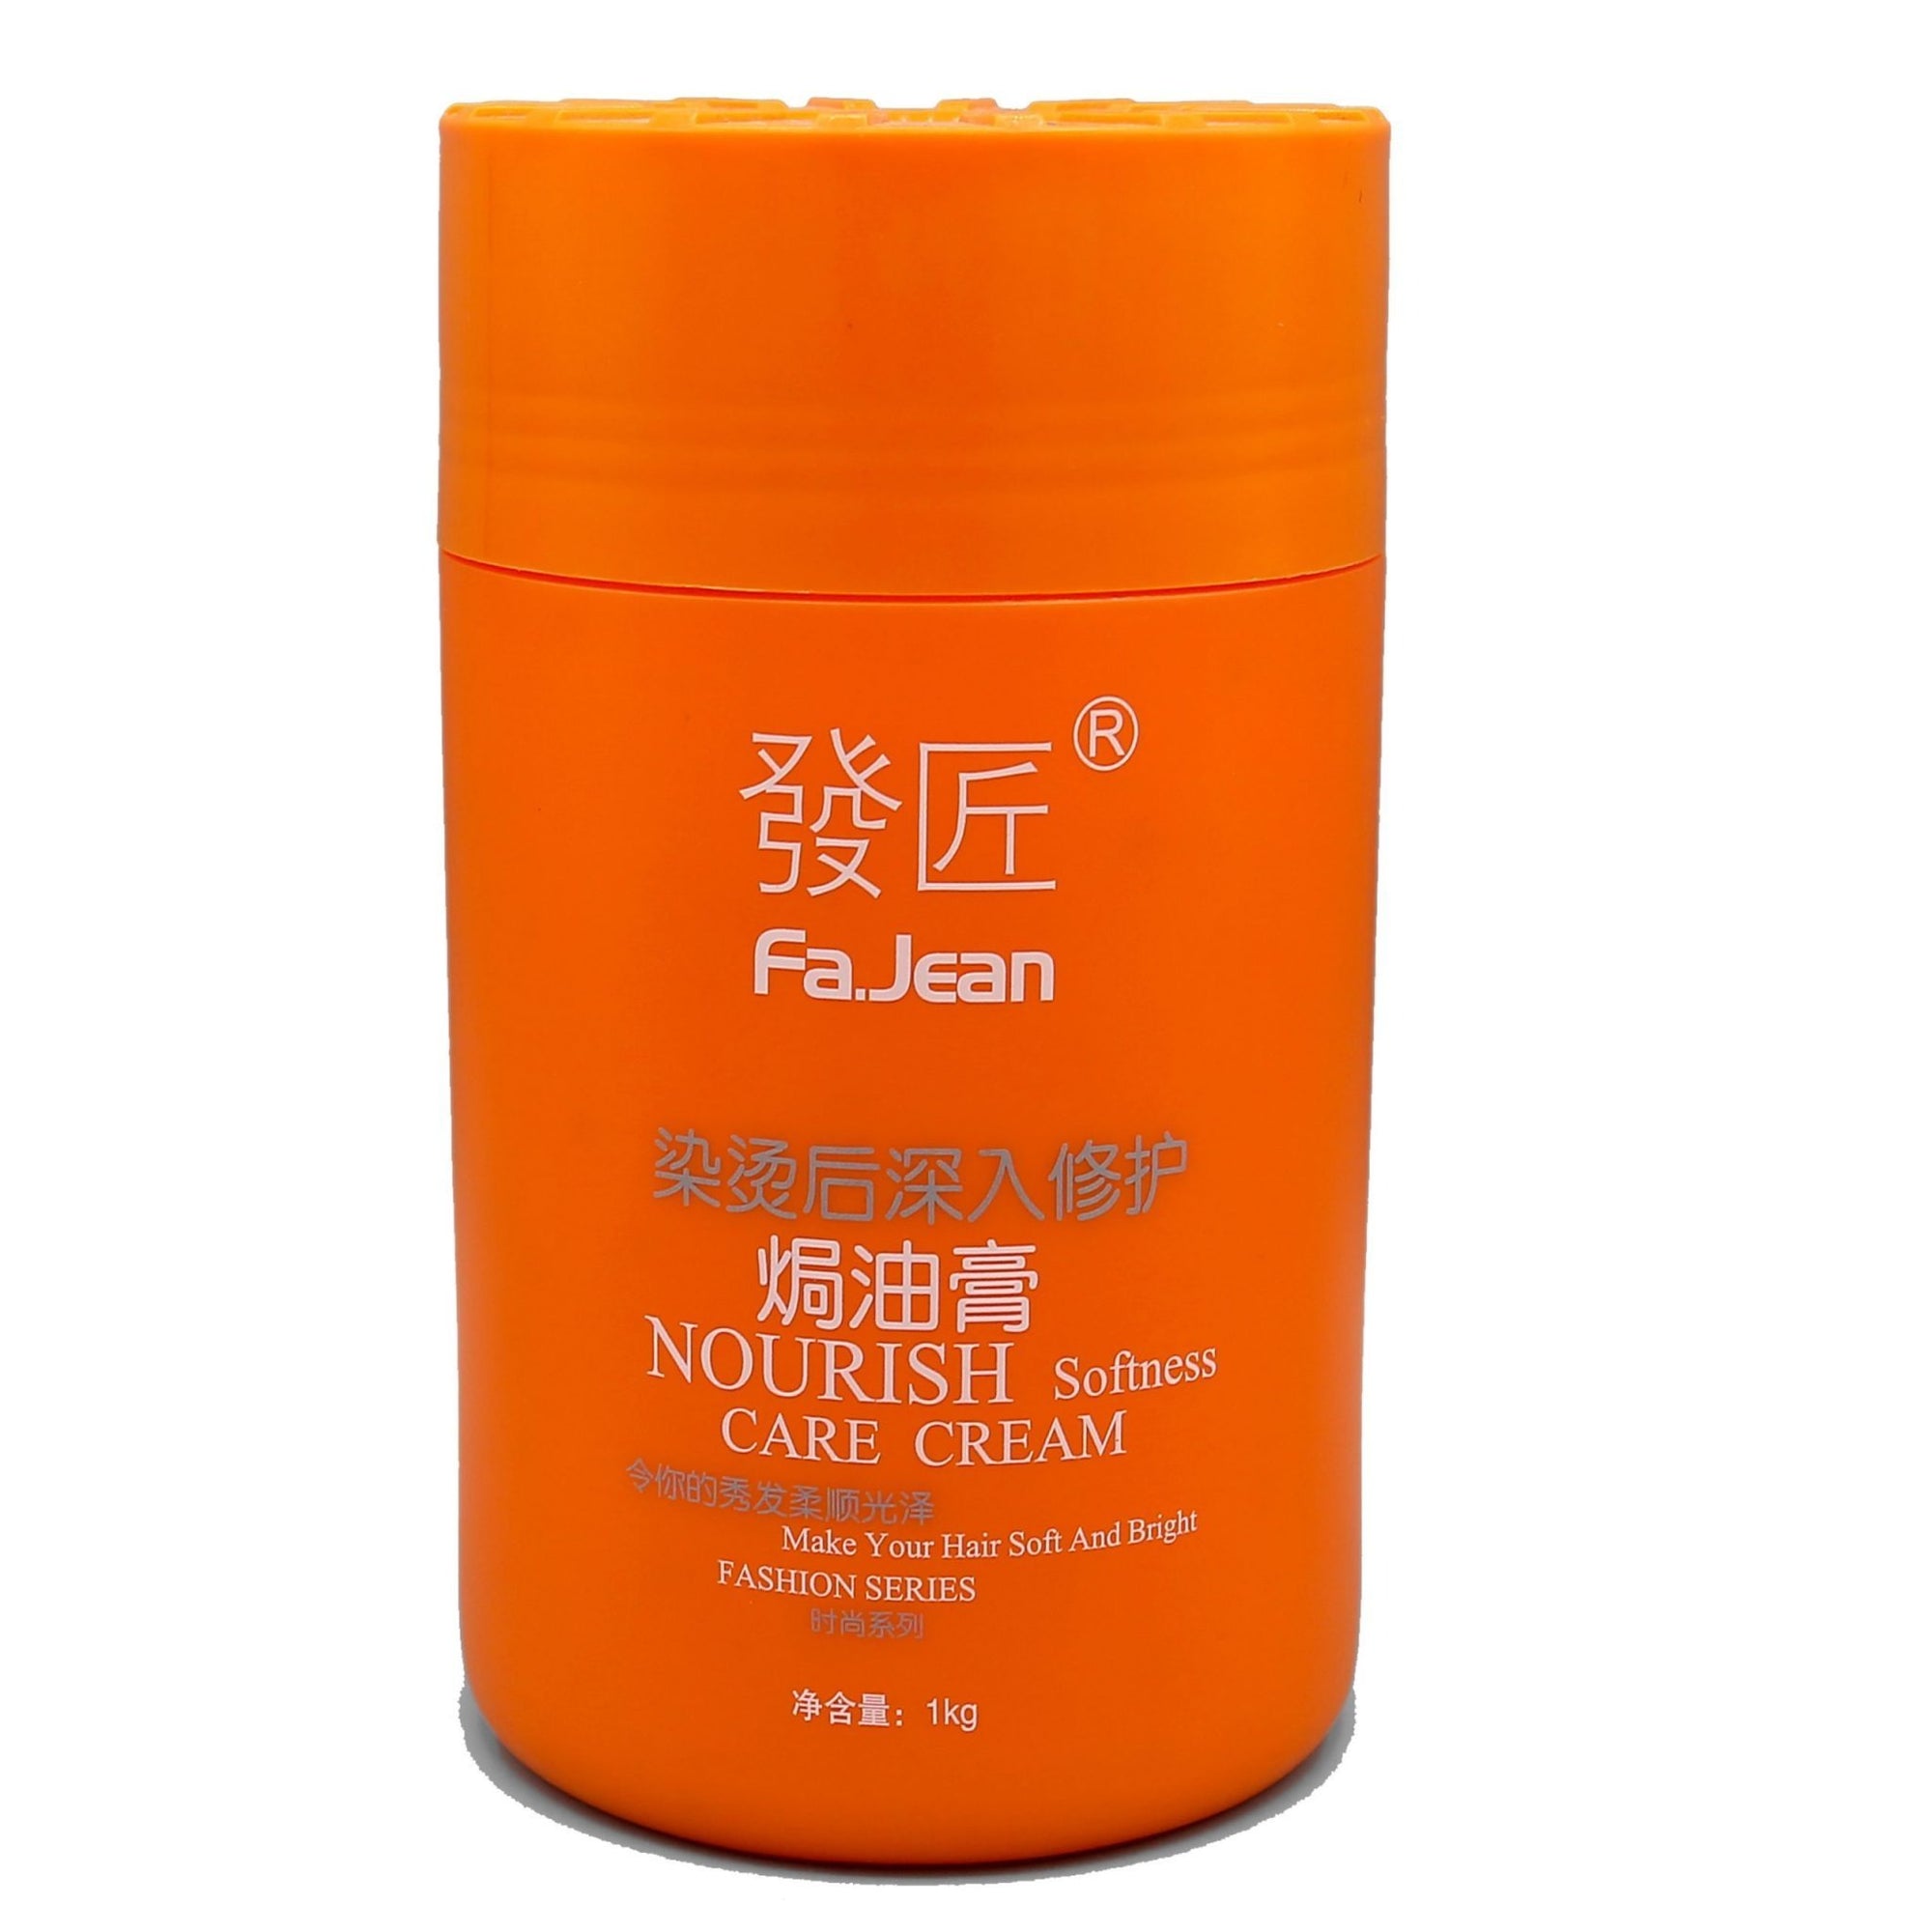 Fajean Hair Mask Nourish Softness Care Cream For Hair soft And Bright 1Kg freeshipping - lasertag.pk